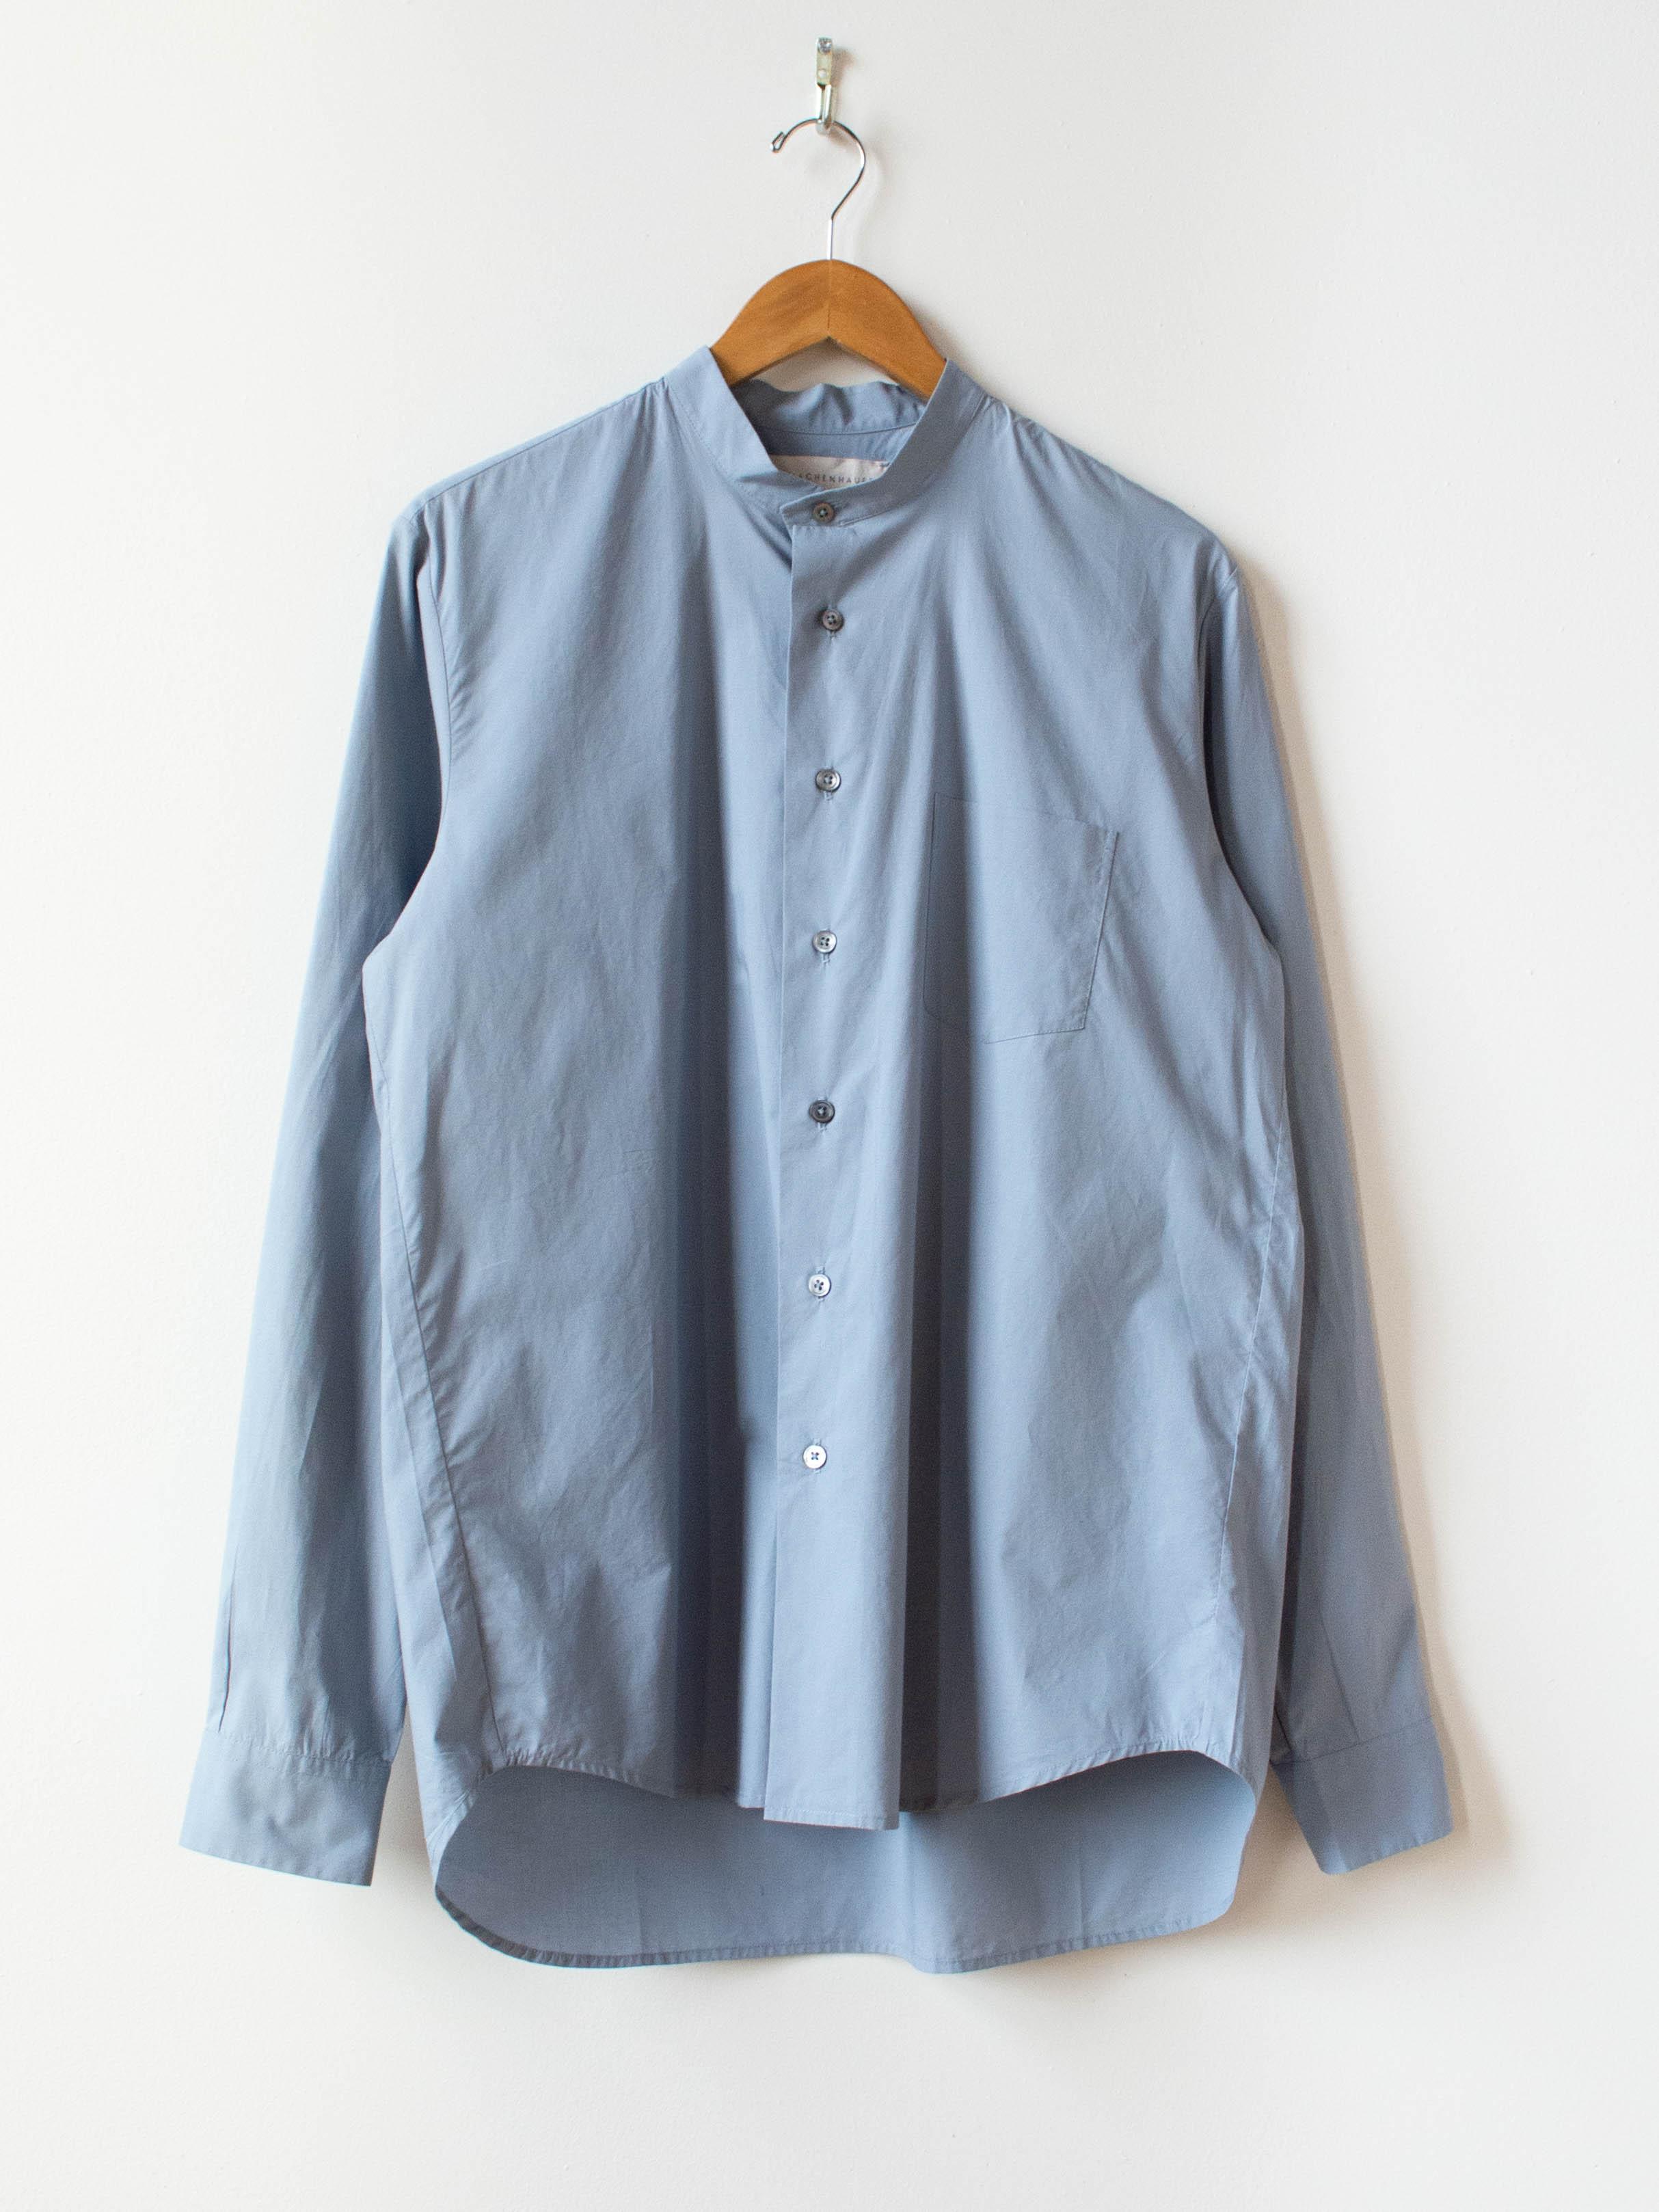 Namu Shop - Jan Machenhauer Ran Shirt - Blue Gray